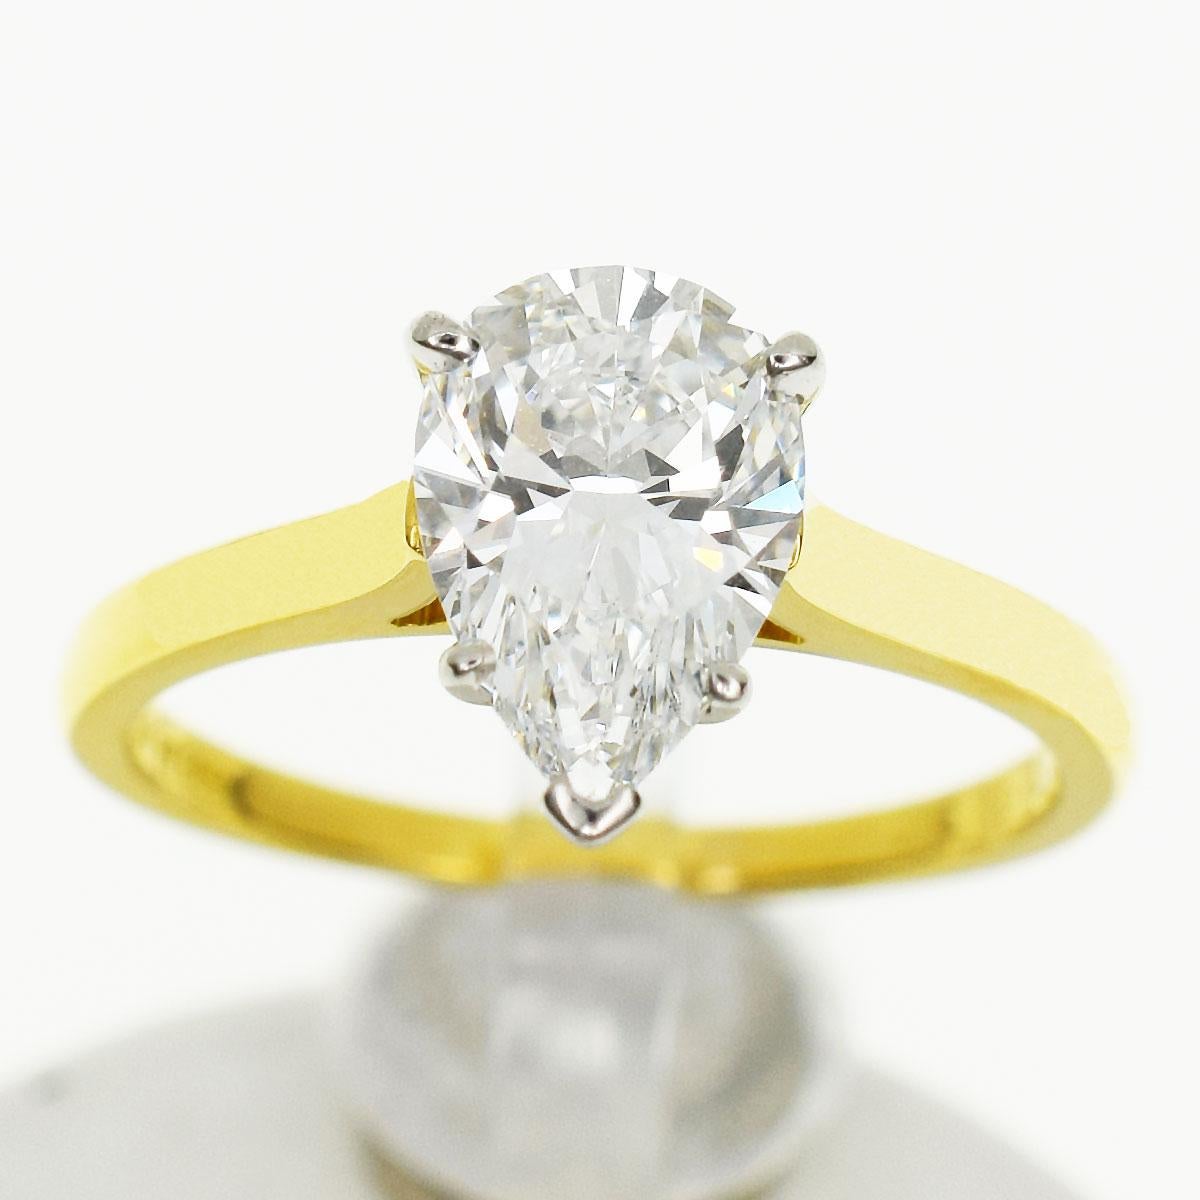 Marke:TIFFANY&Co.
Name:Birnenförmiger Diamantring
Material :1P Diamant (D1.26ct E-VVS2), 750 K 18 YG Gelbgold, PT 950 Platin
Wird geliefert mit:Tiffany-Box, Etui, Tiffany-Zertifikat, Tiffany-Reparaturbeleg (Jahr 2019)
Ringgröße: Britisch &